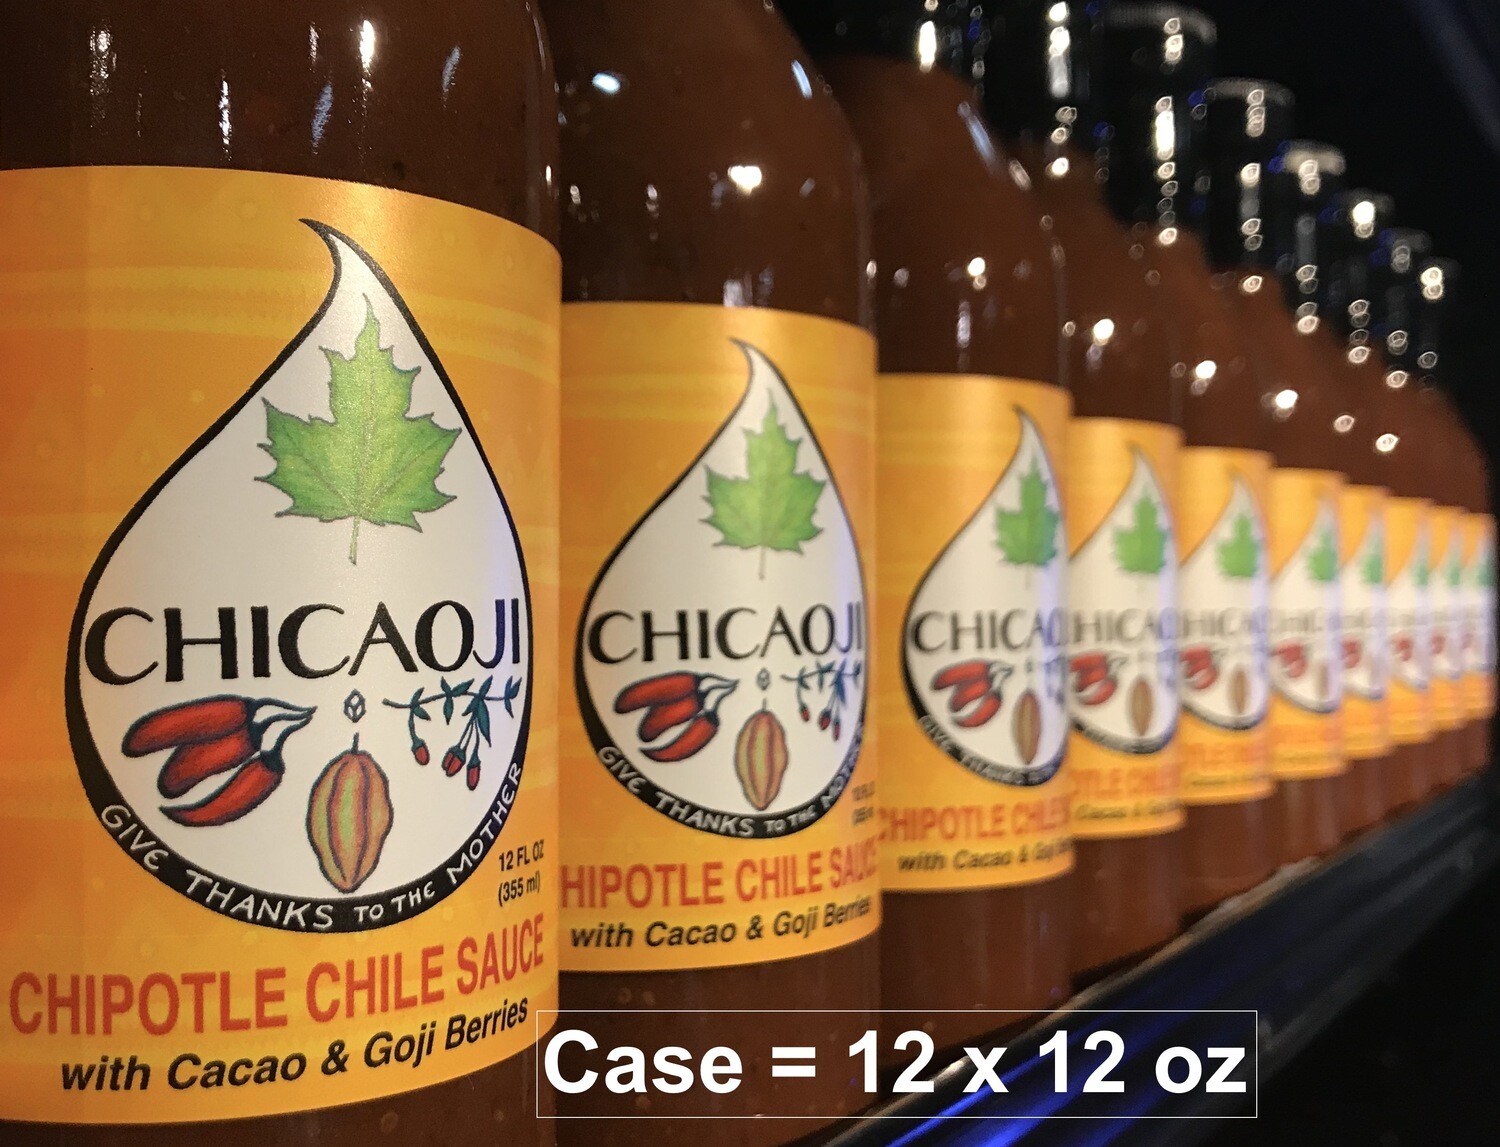 Case: 12 x 12 oz bottles.
Flat Rate Shipping $14